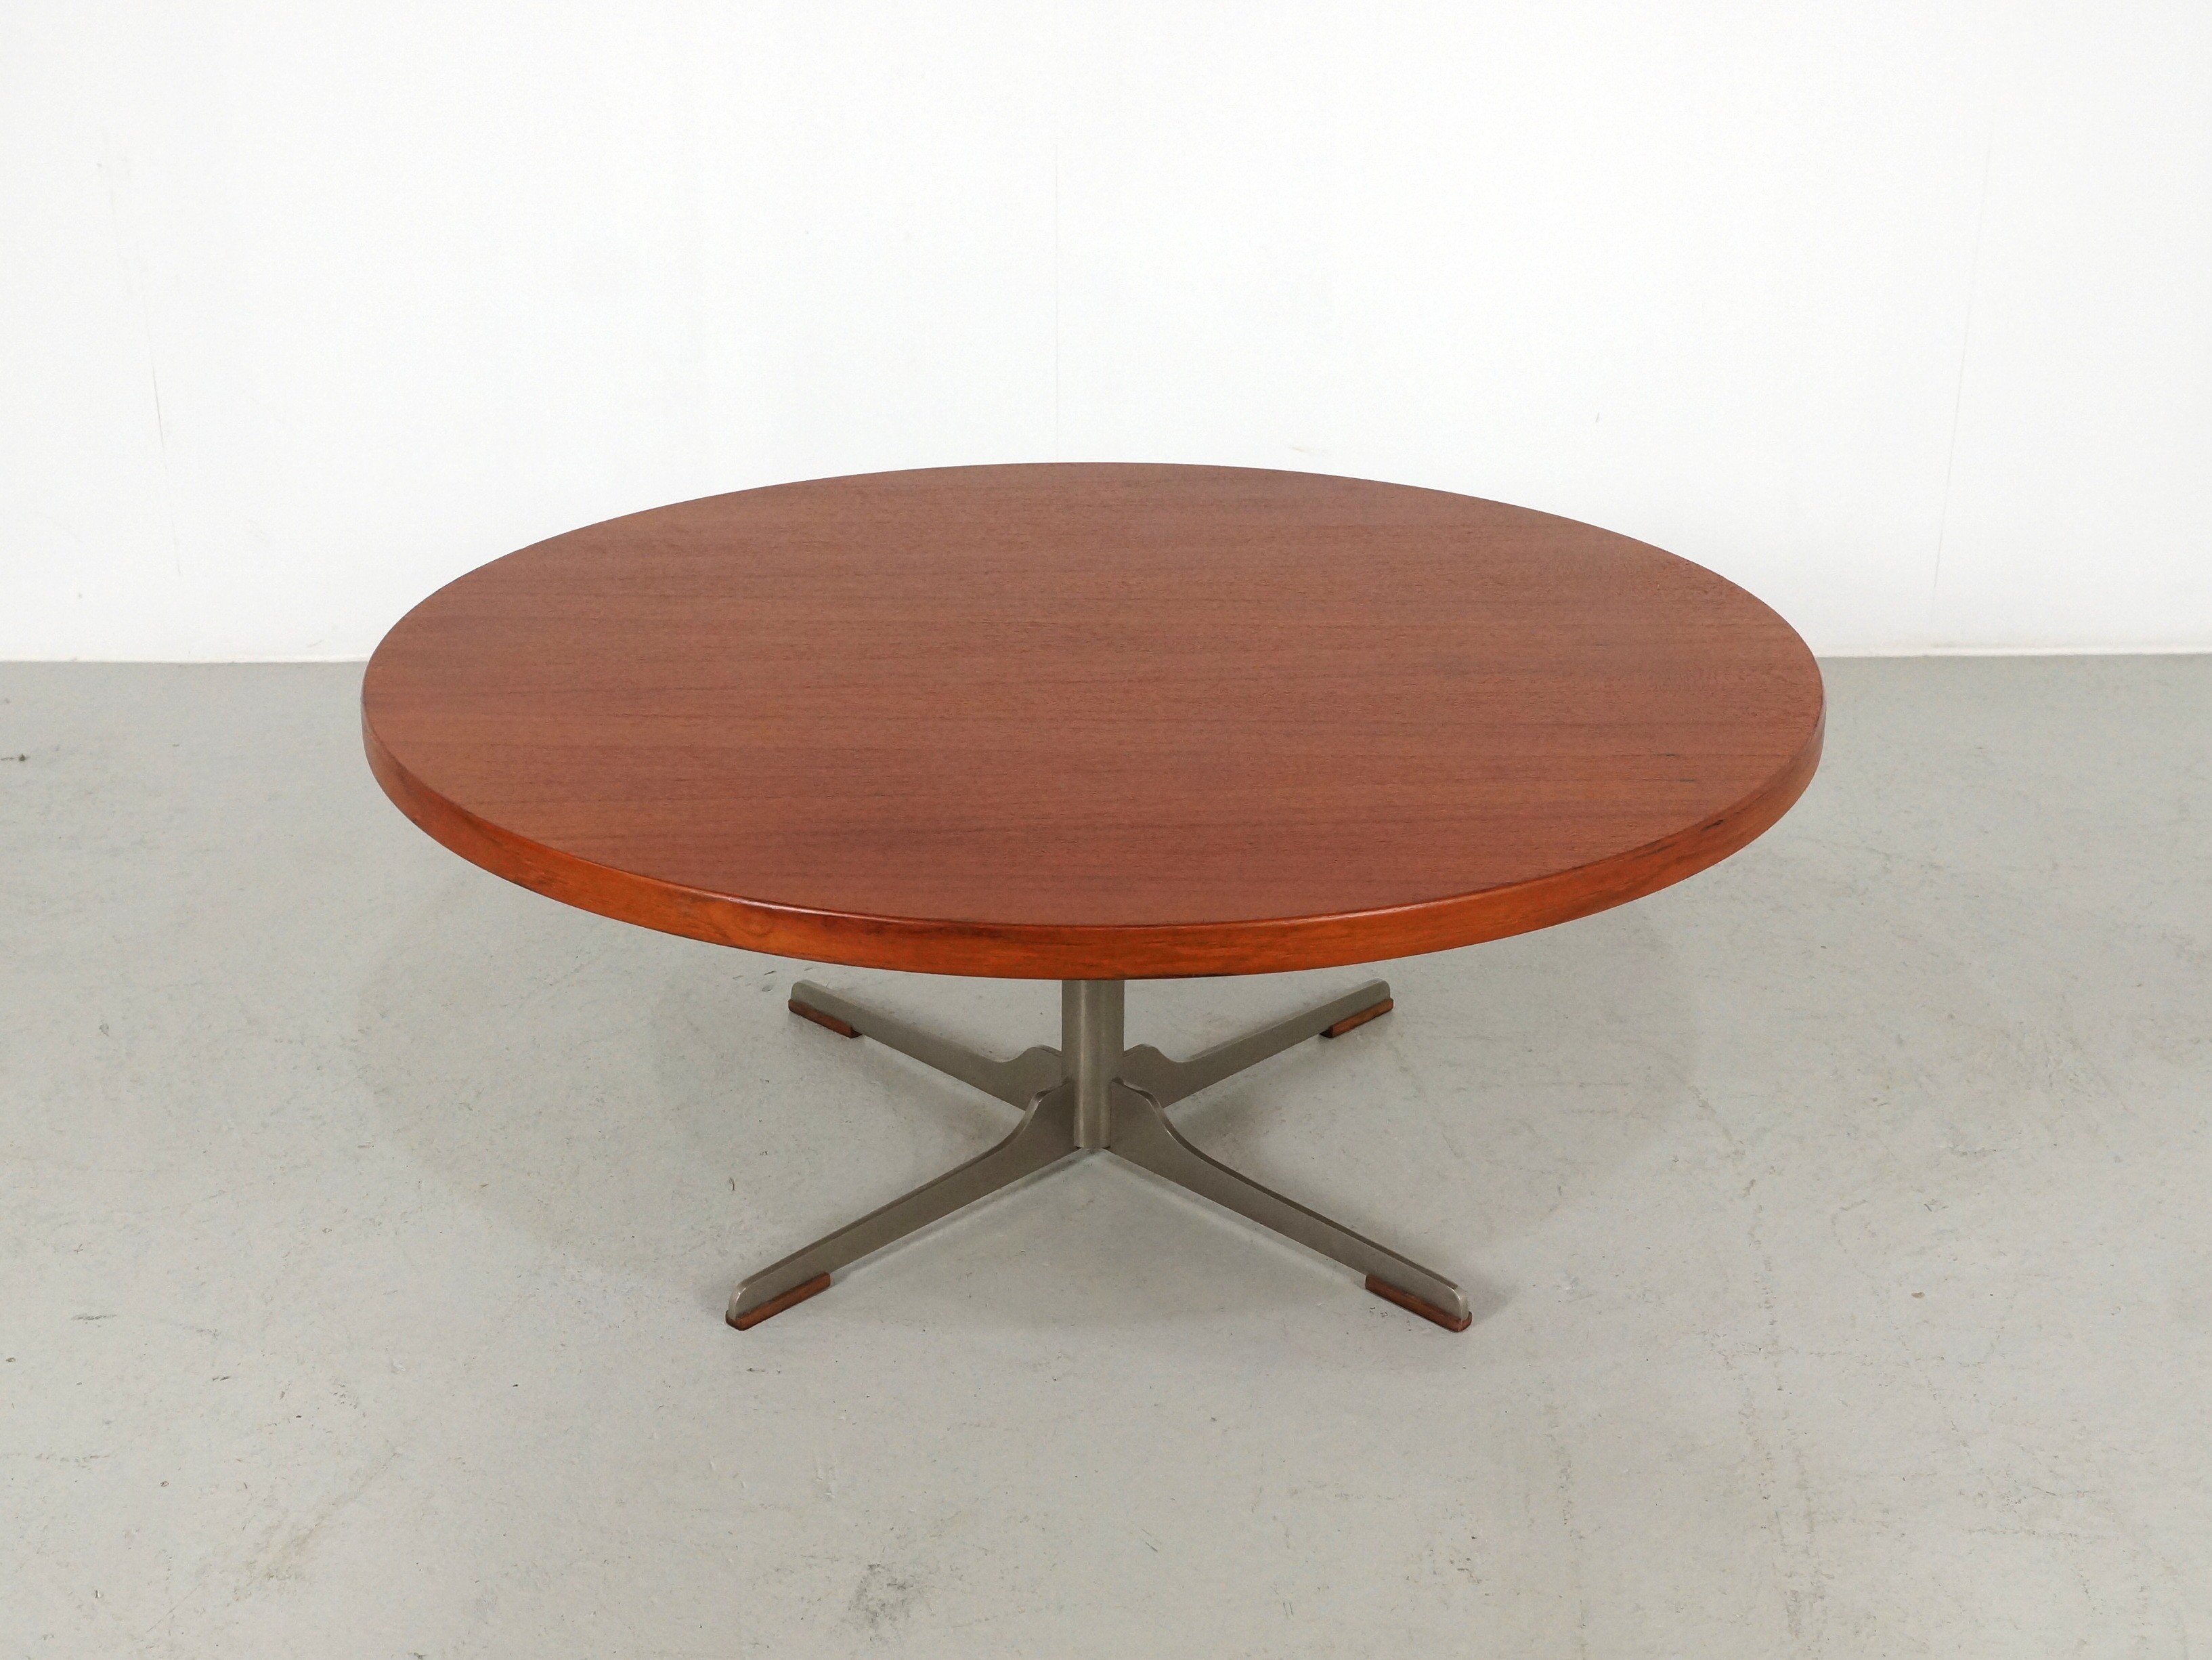 Vintage round teak coffee table - 1960s - Design Market